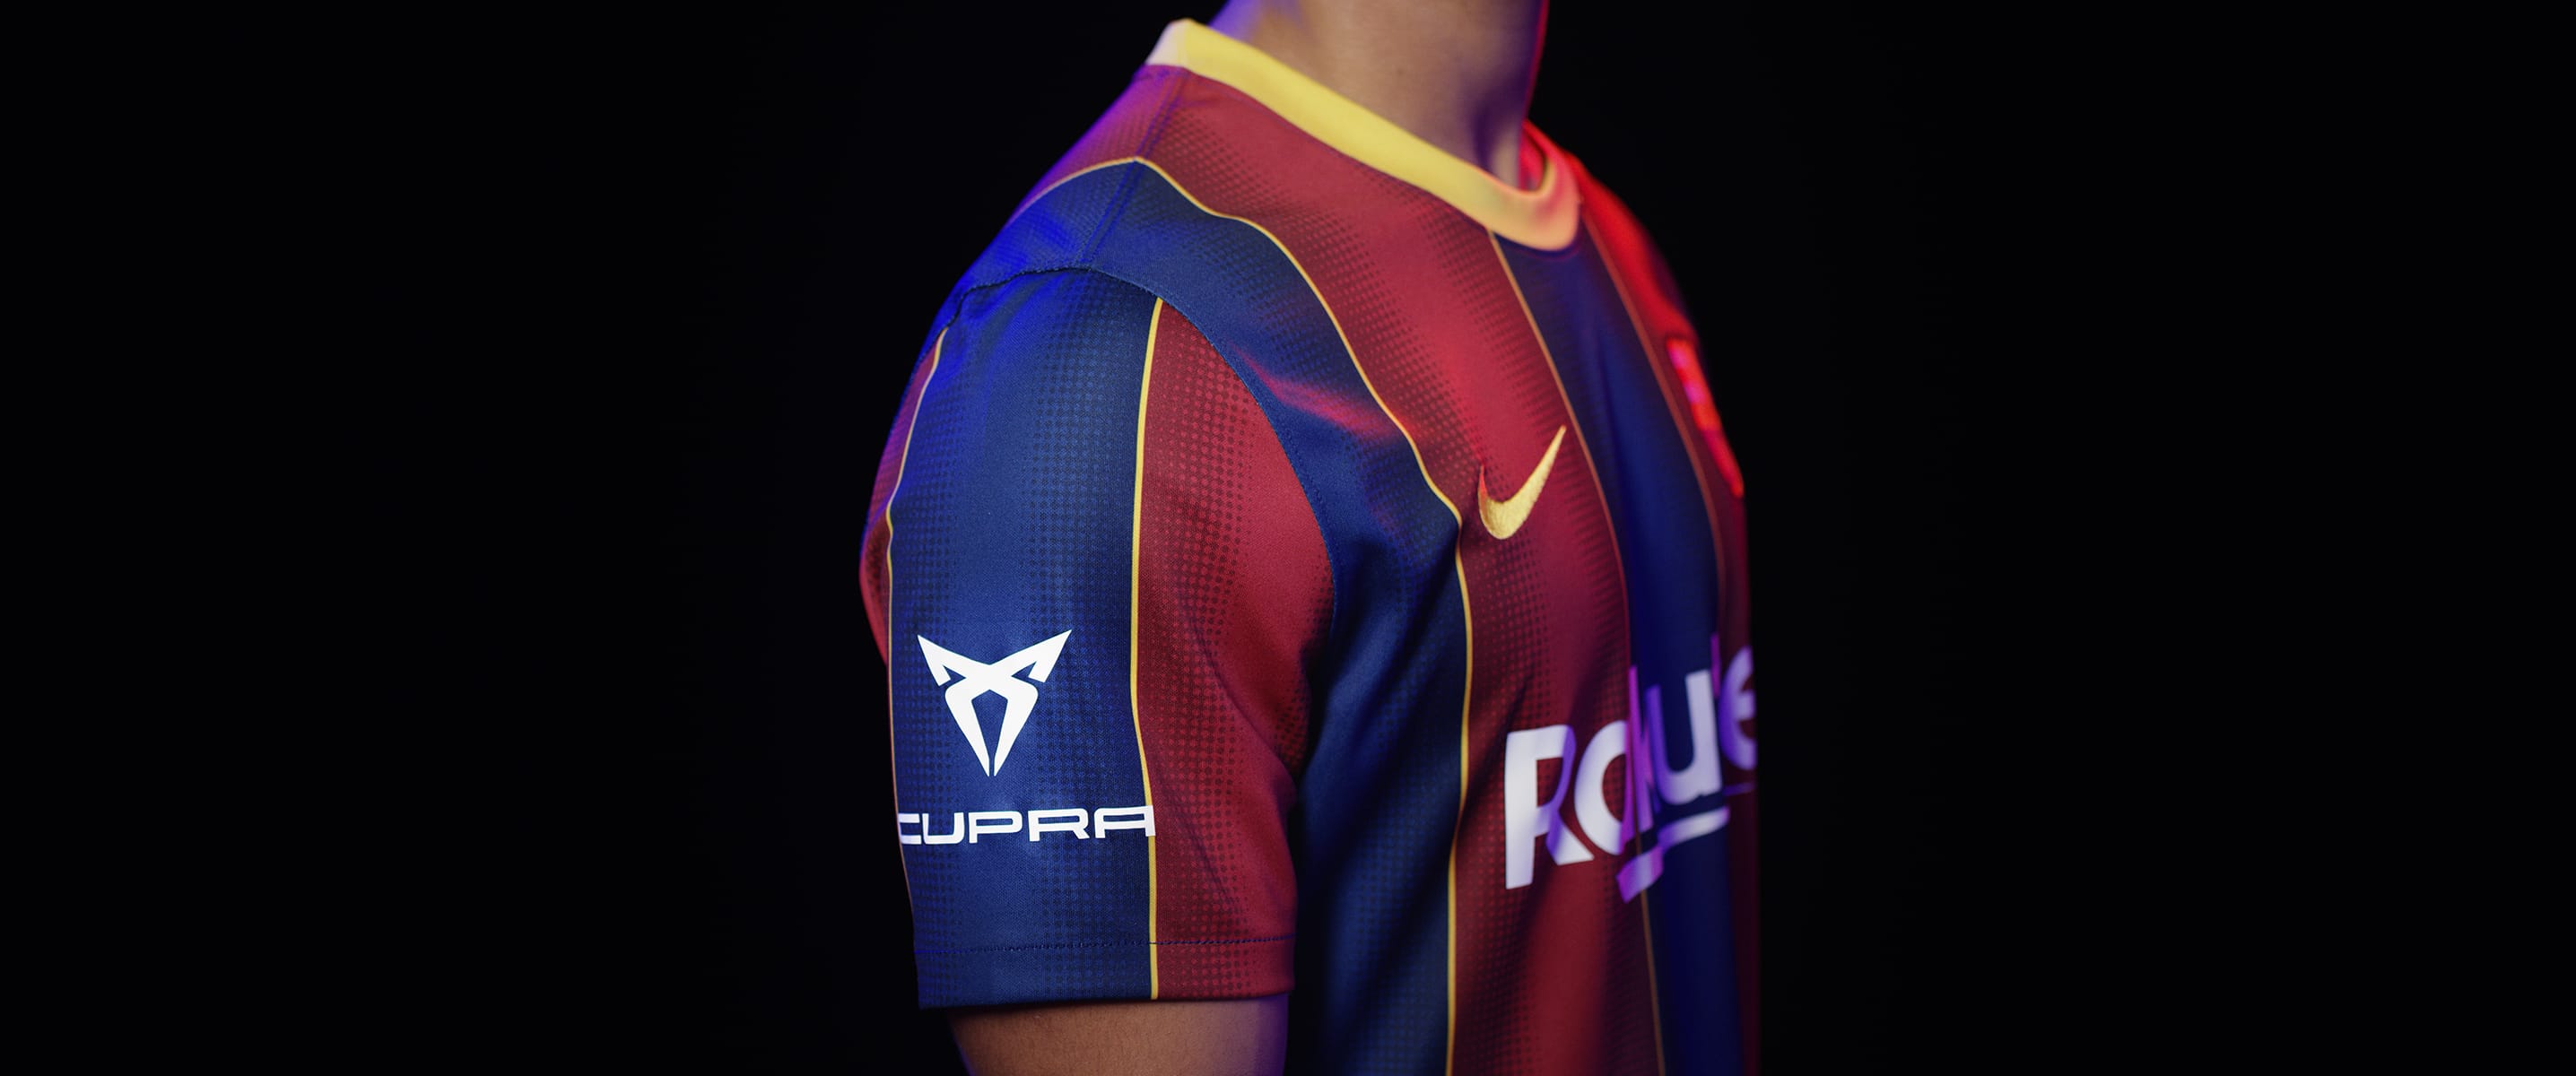 fc Barcelona shirt with cupra logo gamper